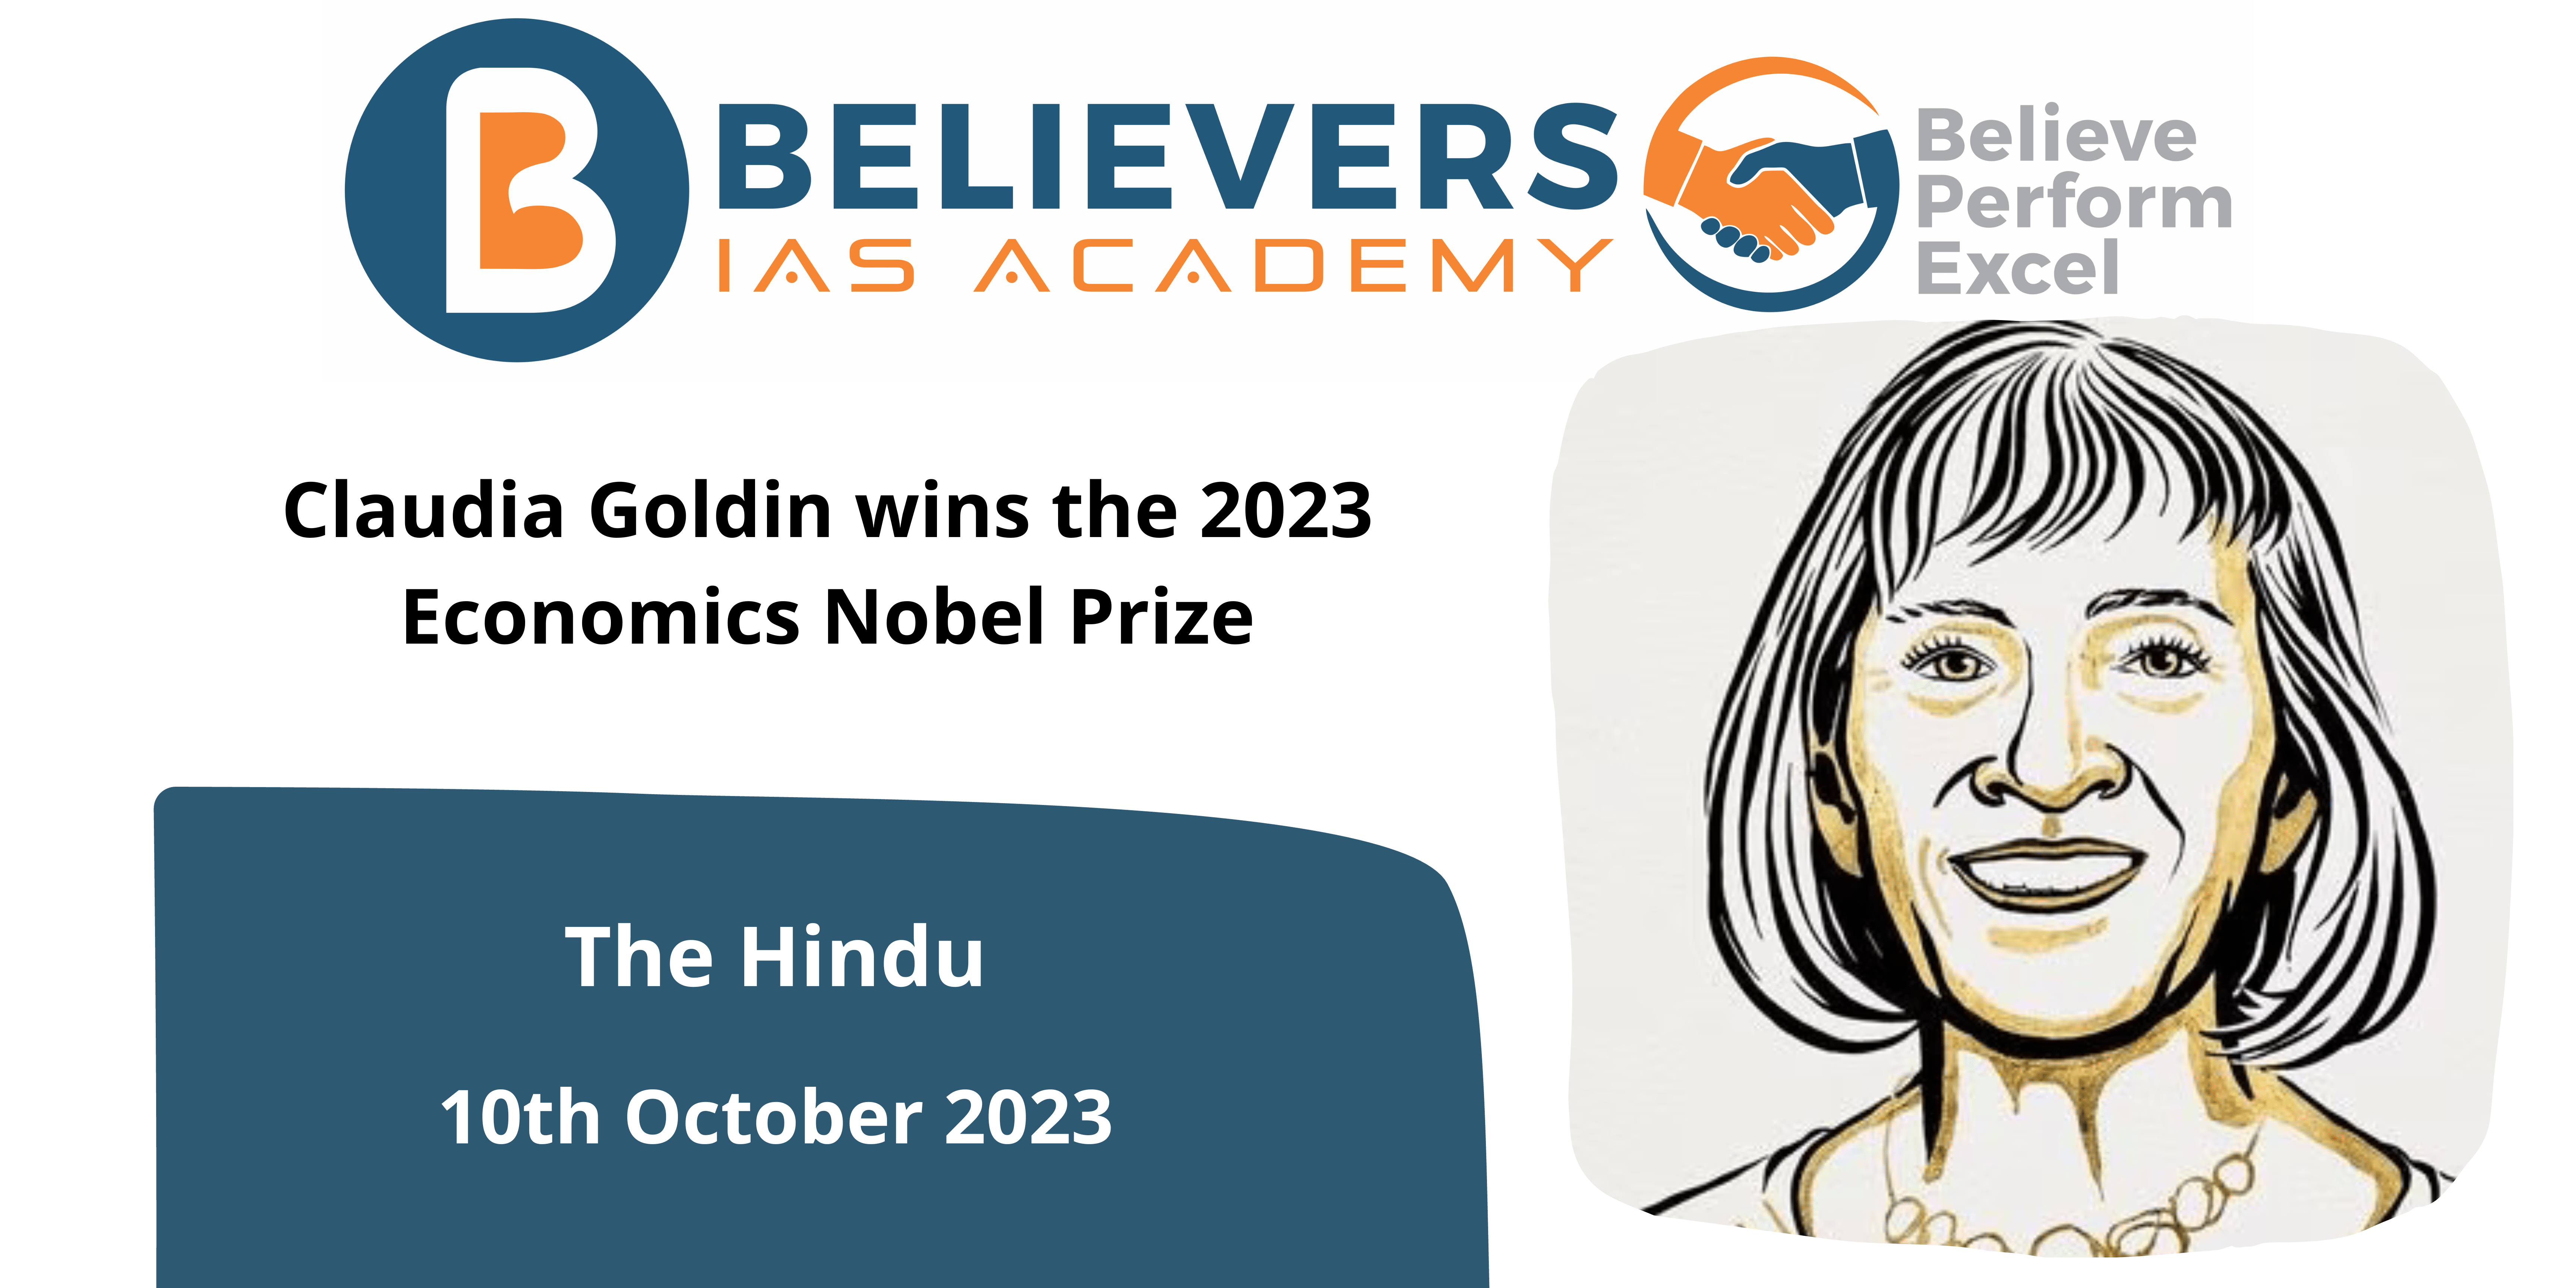 Claudia Goldin wins the 2023 Economics Nobel Prize